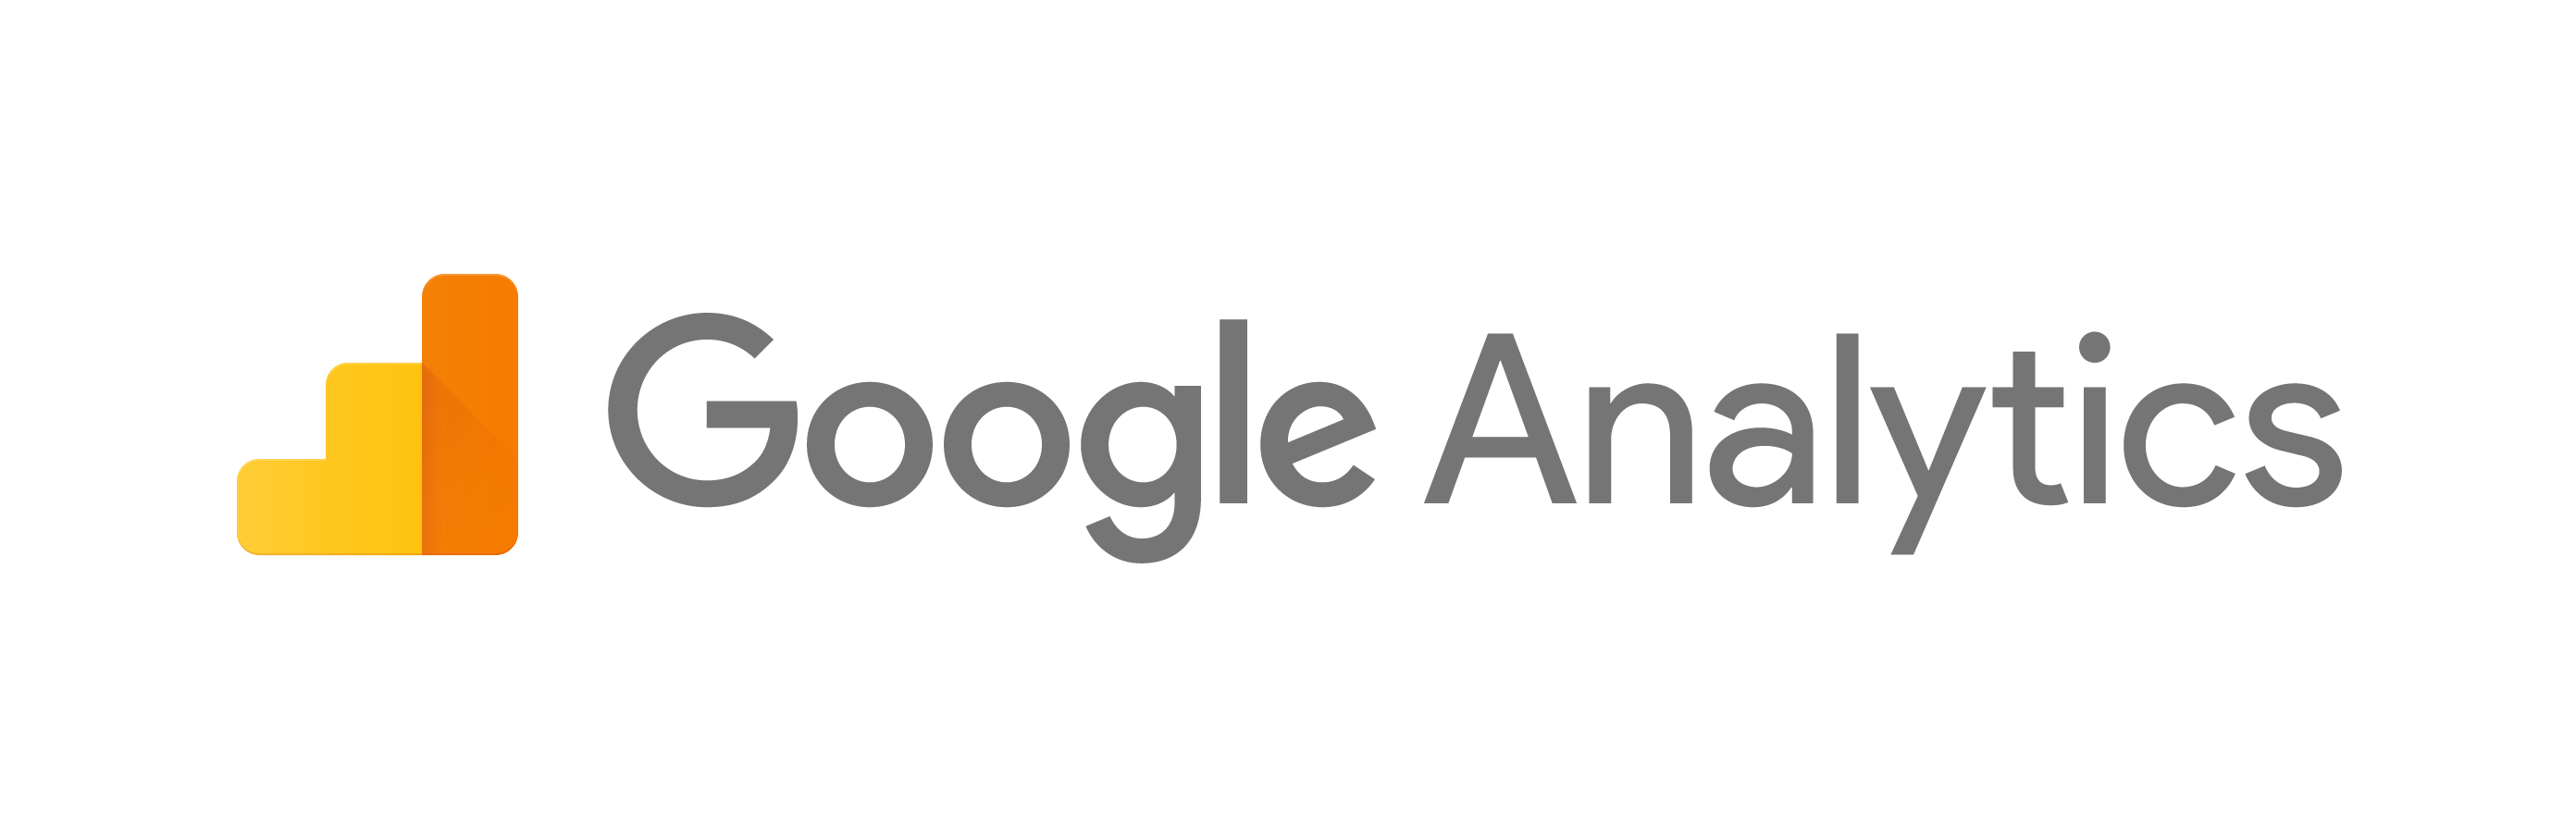 Google Analytics Icon Vector Free Icons Library